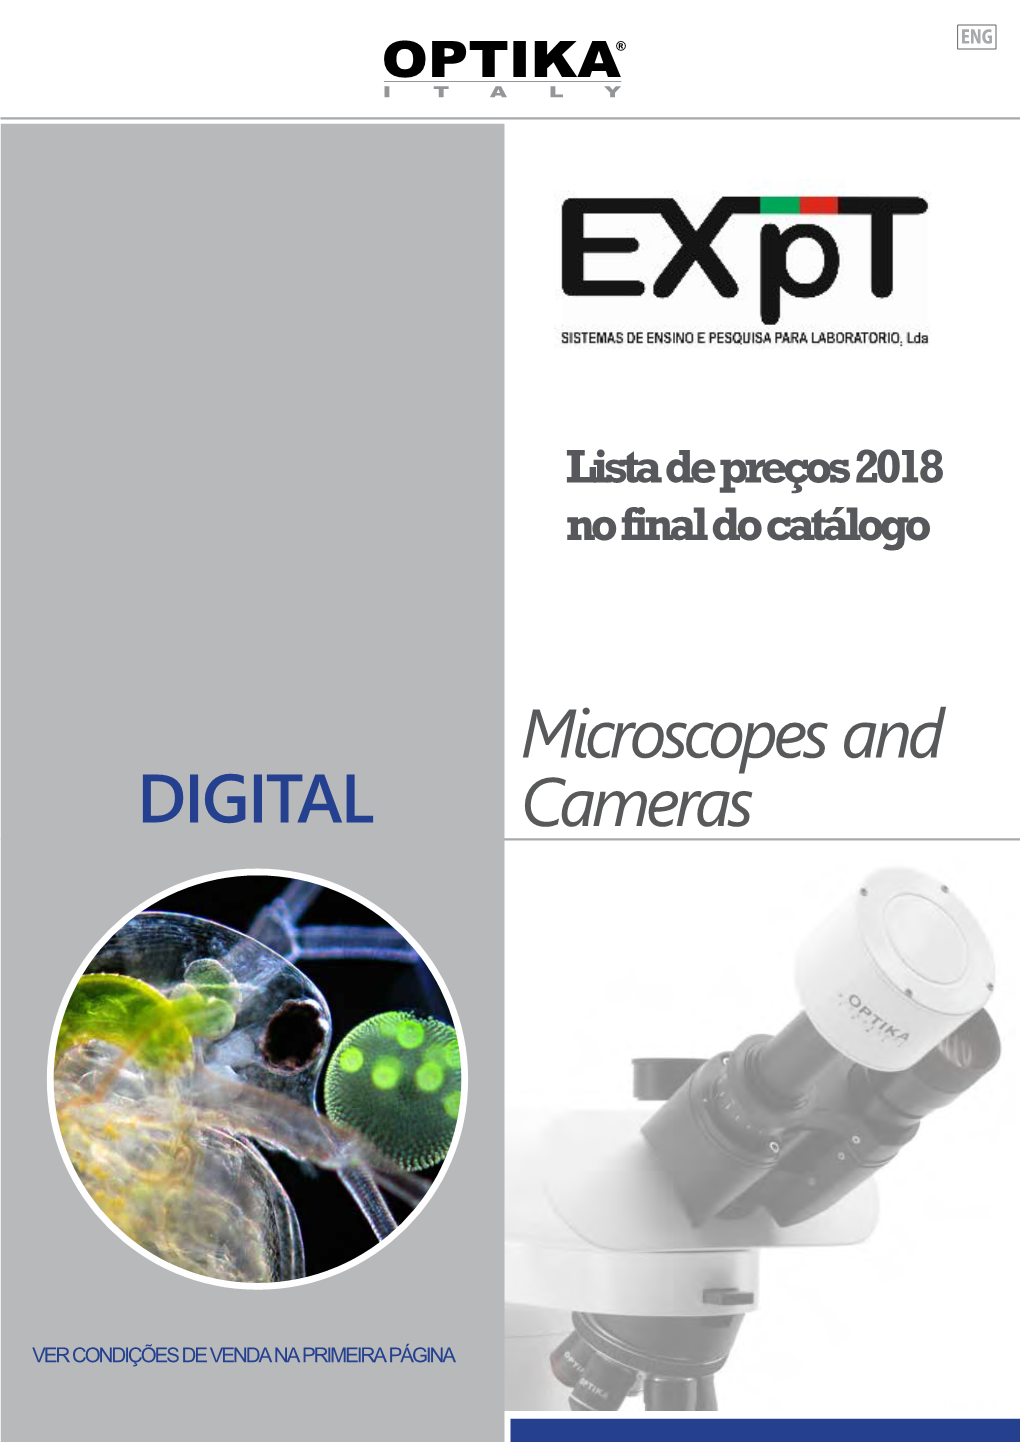 DIGITAL Microscopes and Cameras